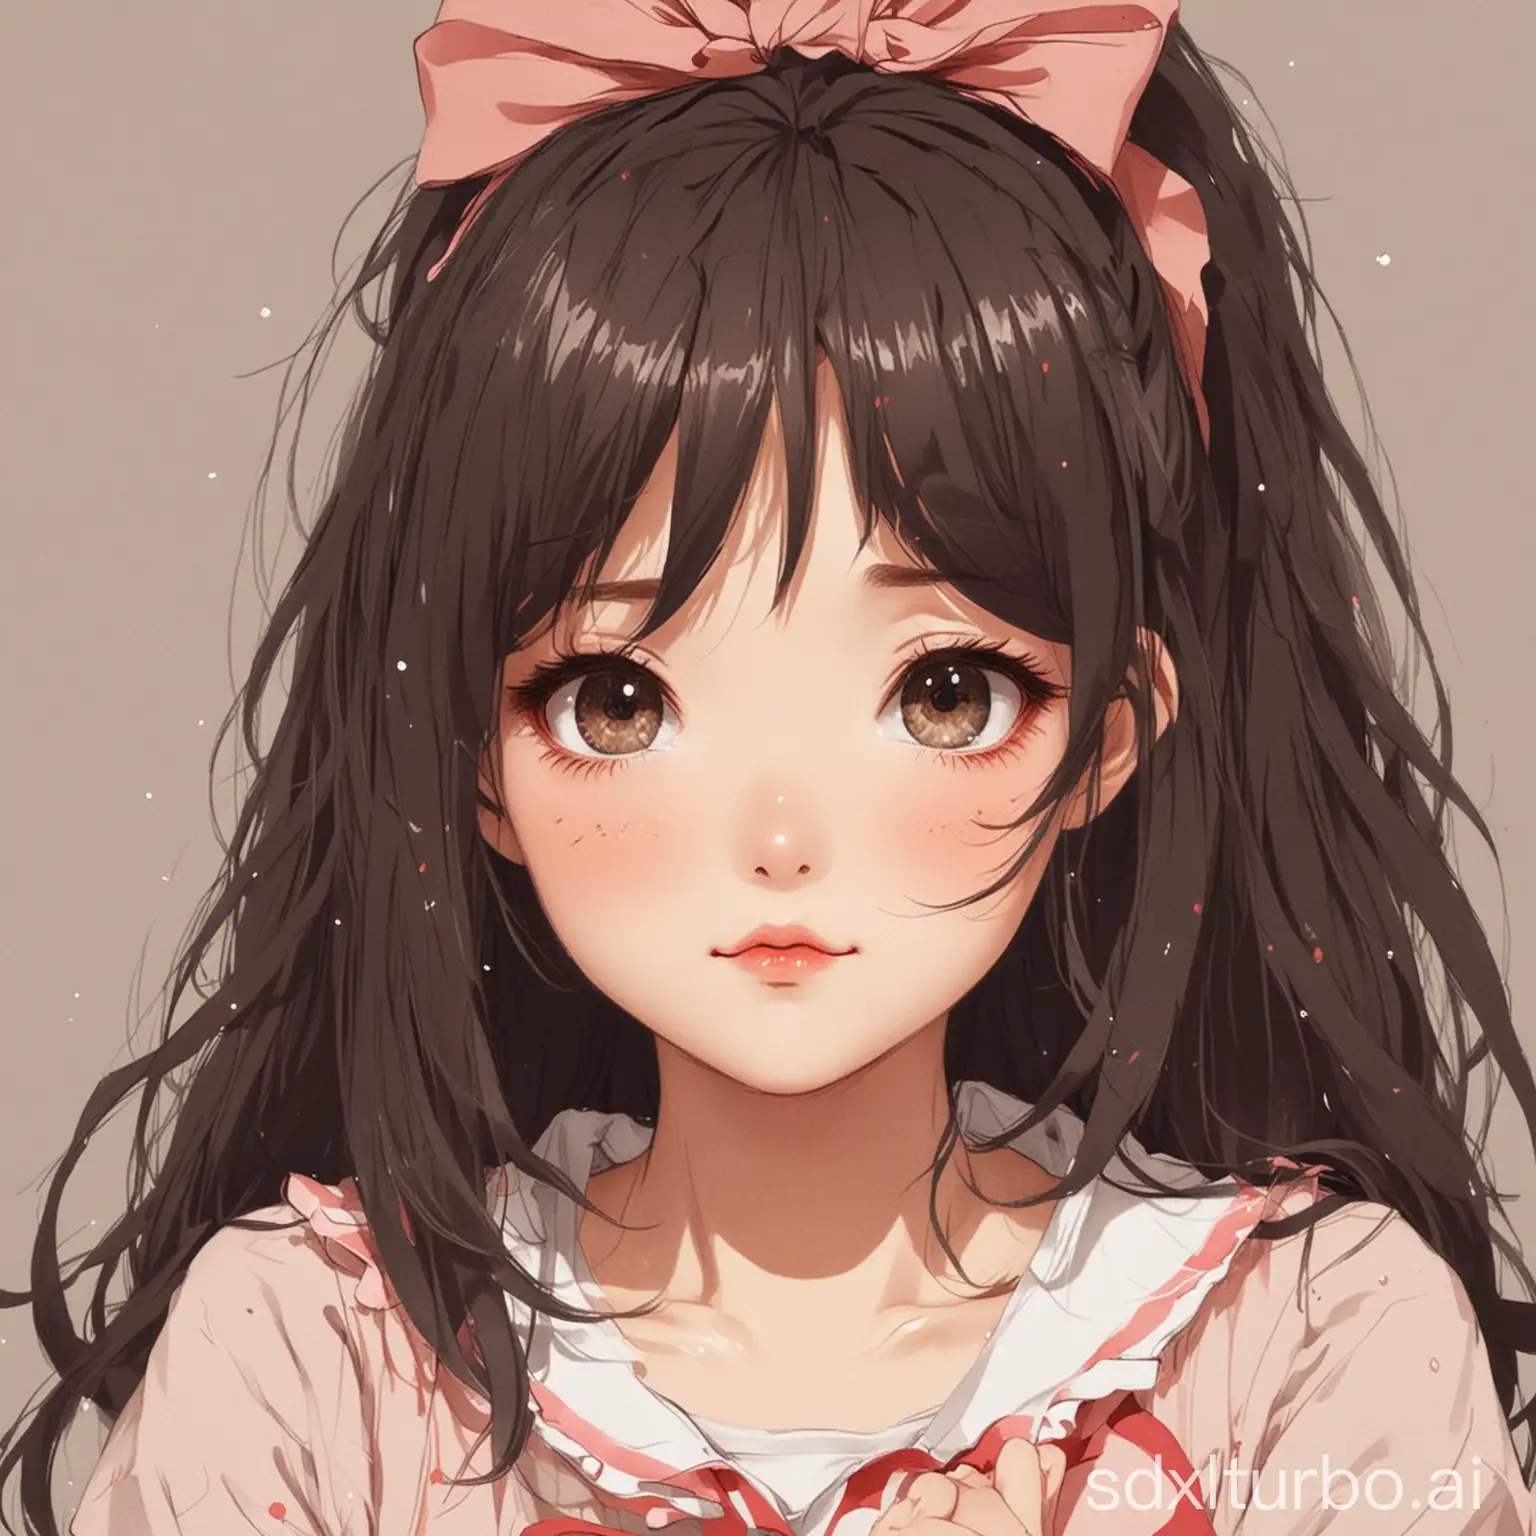 Adorable-Anime-Girl-Illustration-Delightful-Portrayal-of-Youthful-Innocence